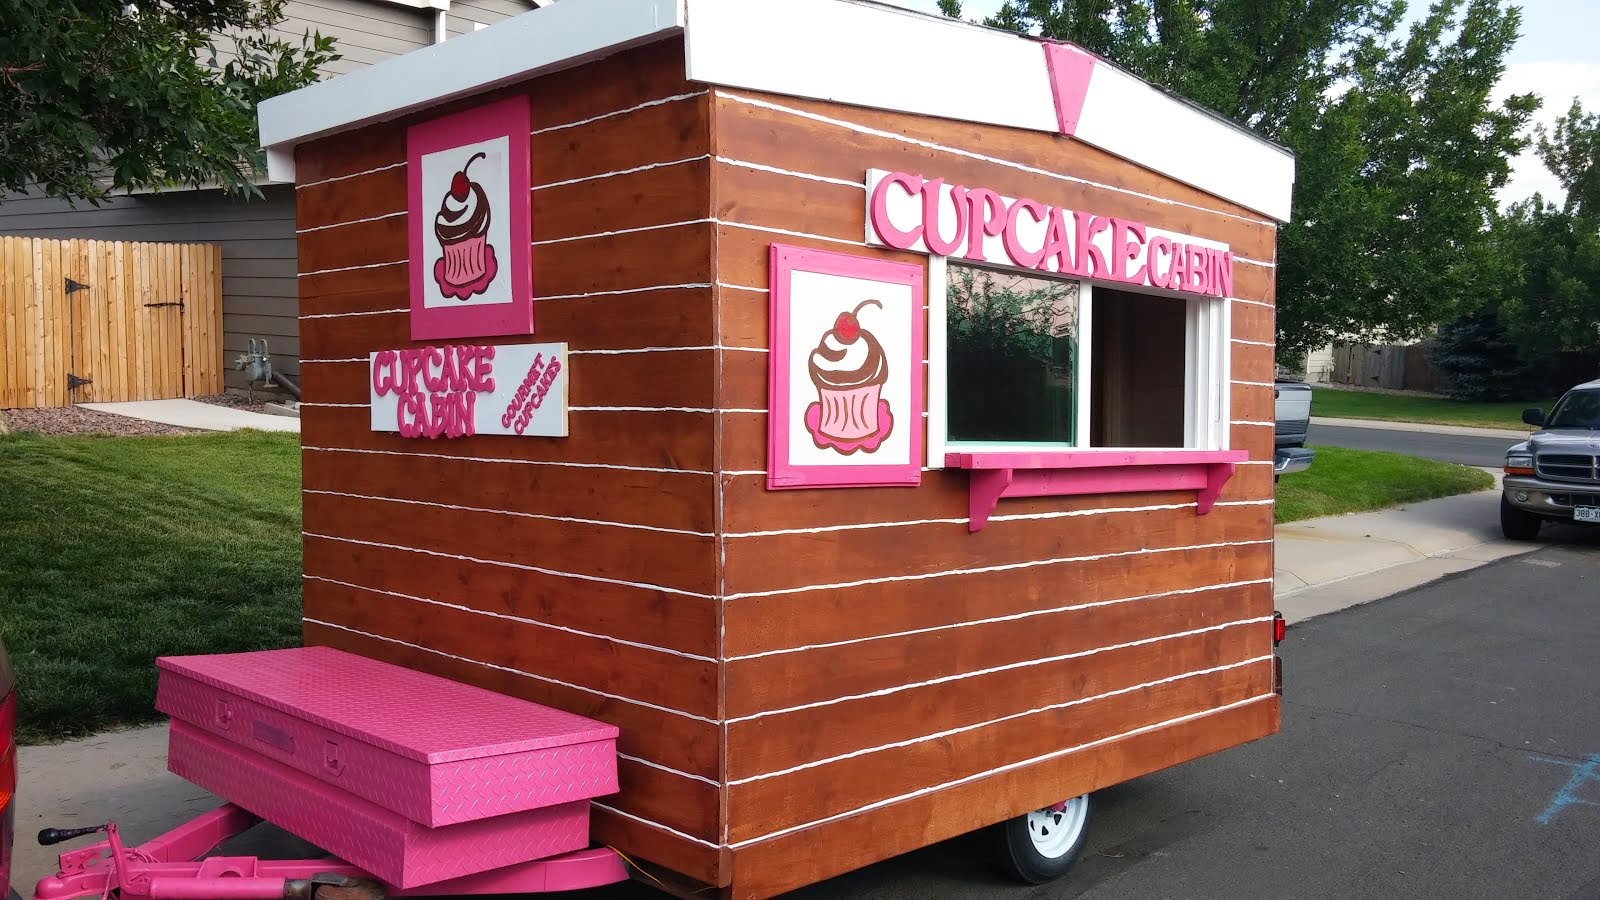 The Mobile Cupcake Cabin